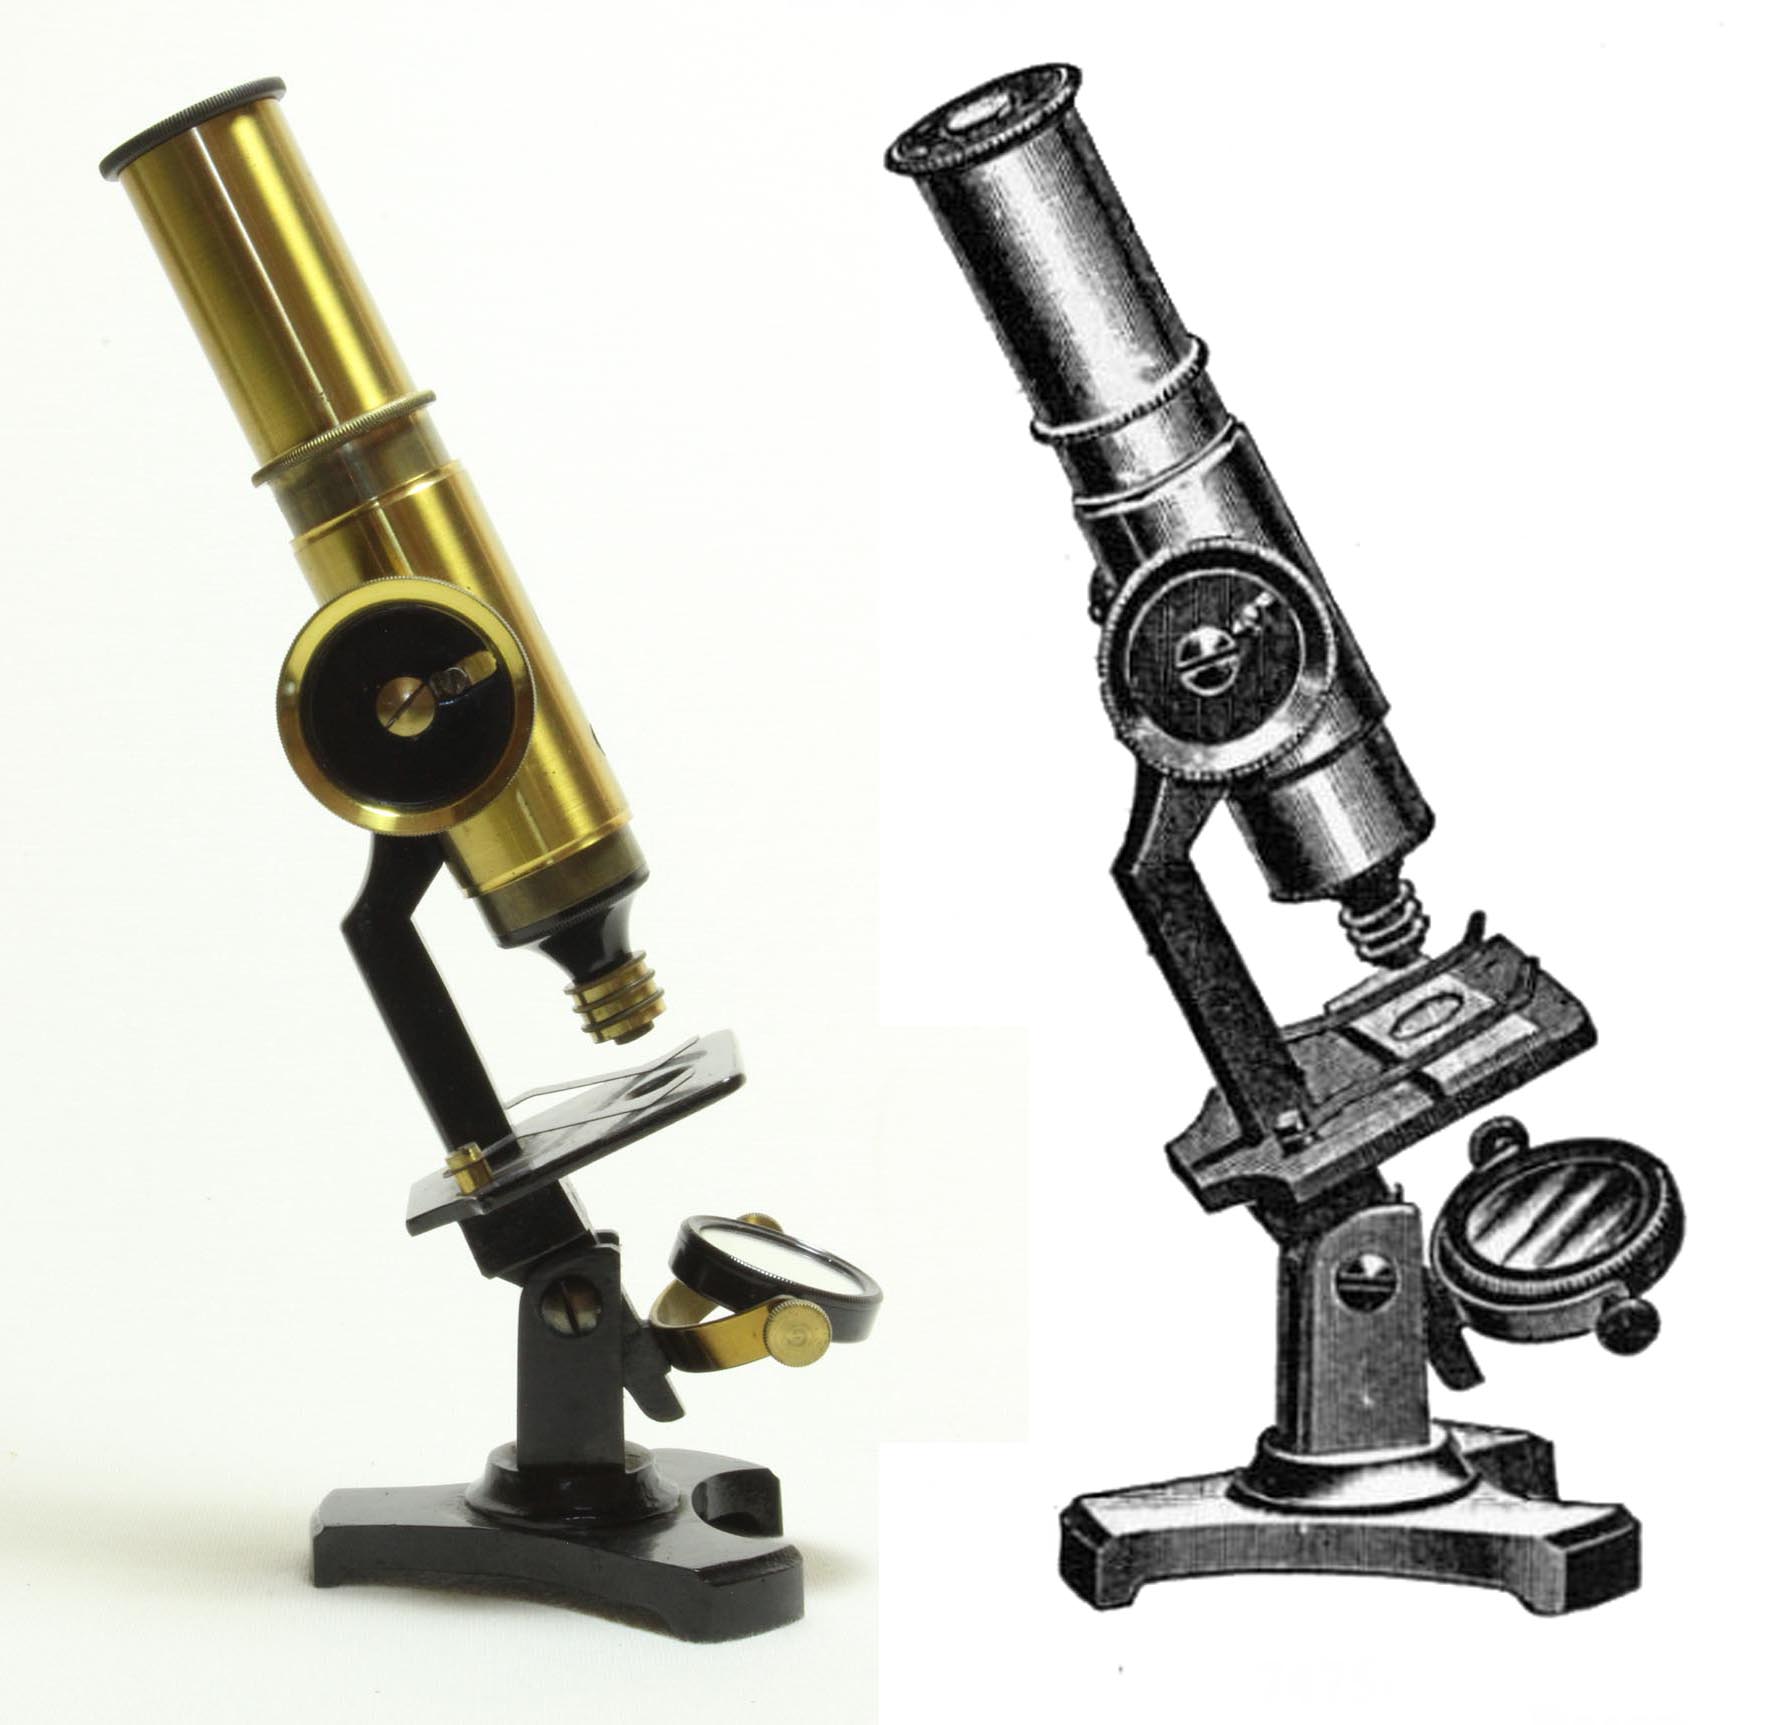 Acme microscope